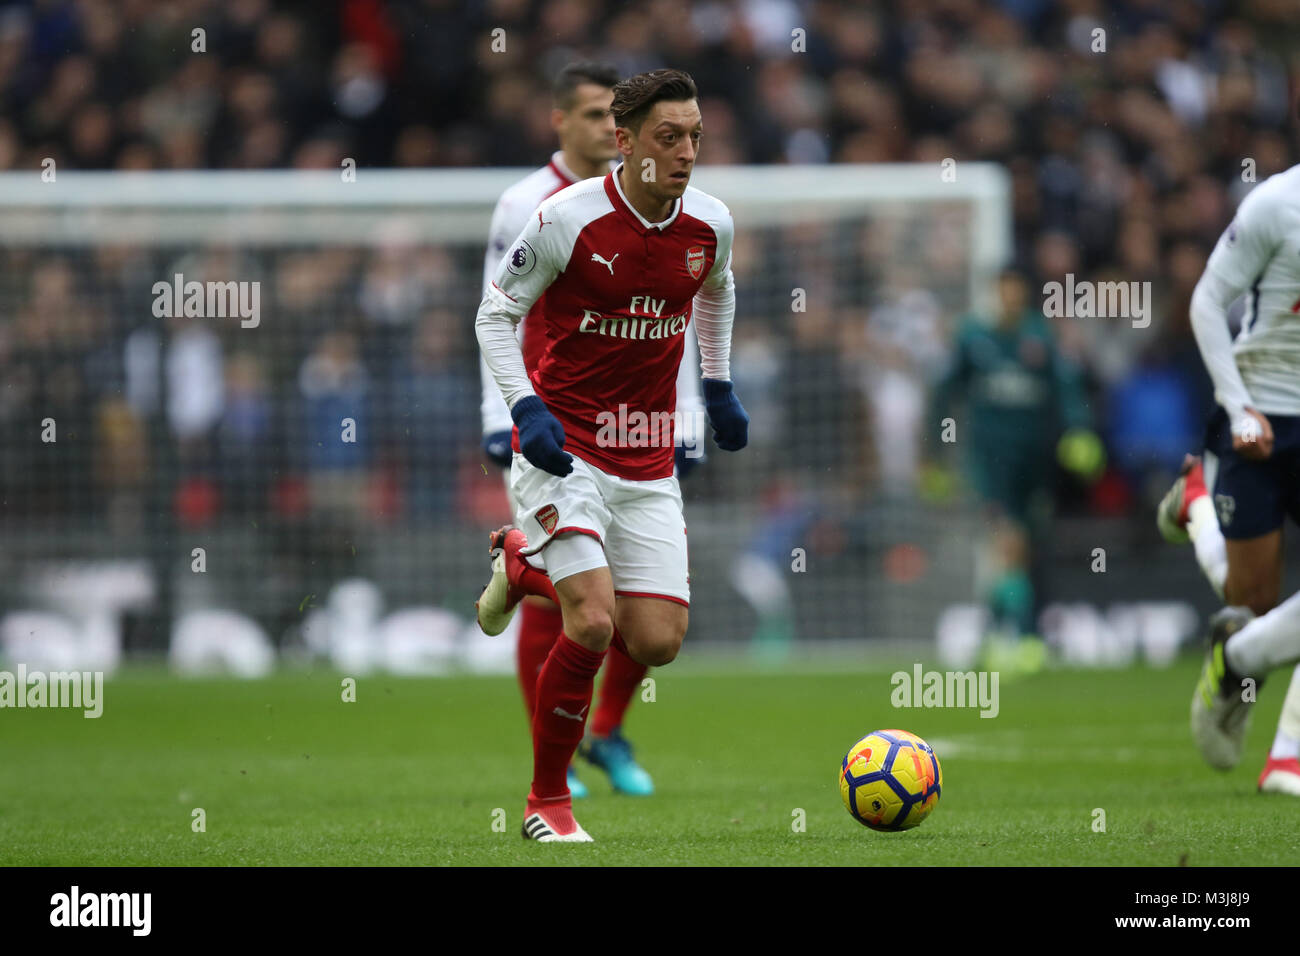 Londres, Reino Unido. El 10 de febrero, 2018. Mesut Ozil (A) en la Premier League inglesa de fútbol entre Tottenham Hotspur v Arsenal en el estadio de Wembley, en Londres, el 10 de febrero de 2018. Crédito: Paul Marriott/Alamy Live News Foto de stock